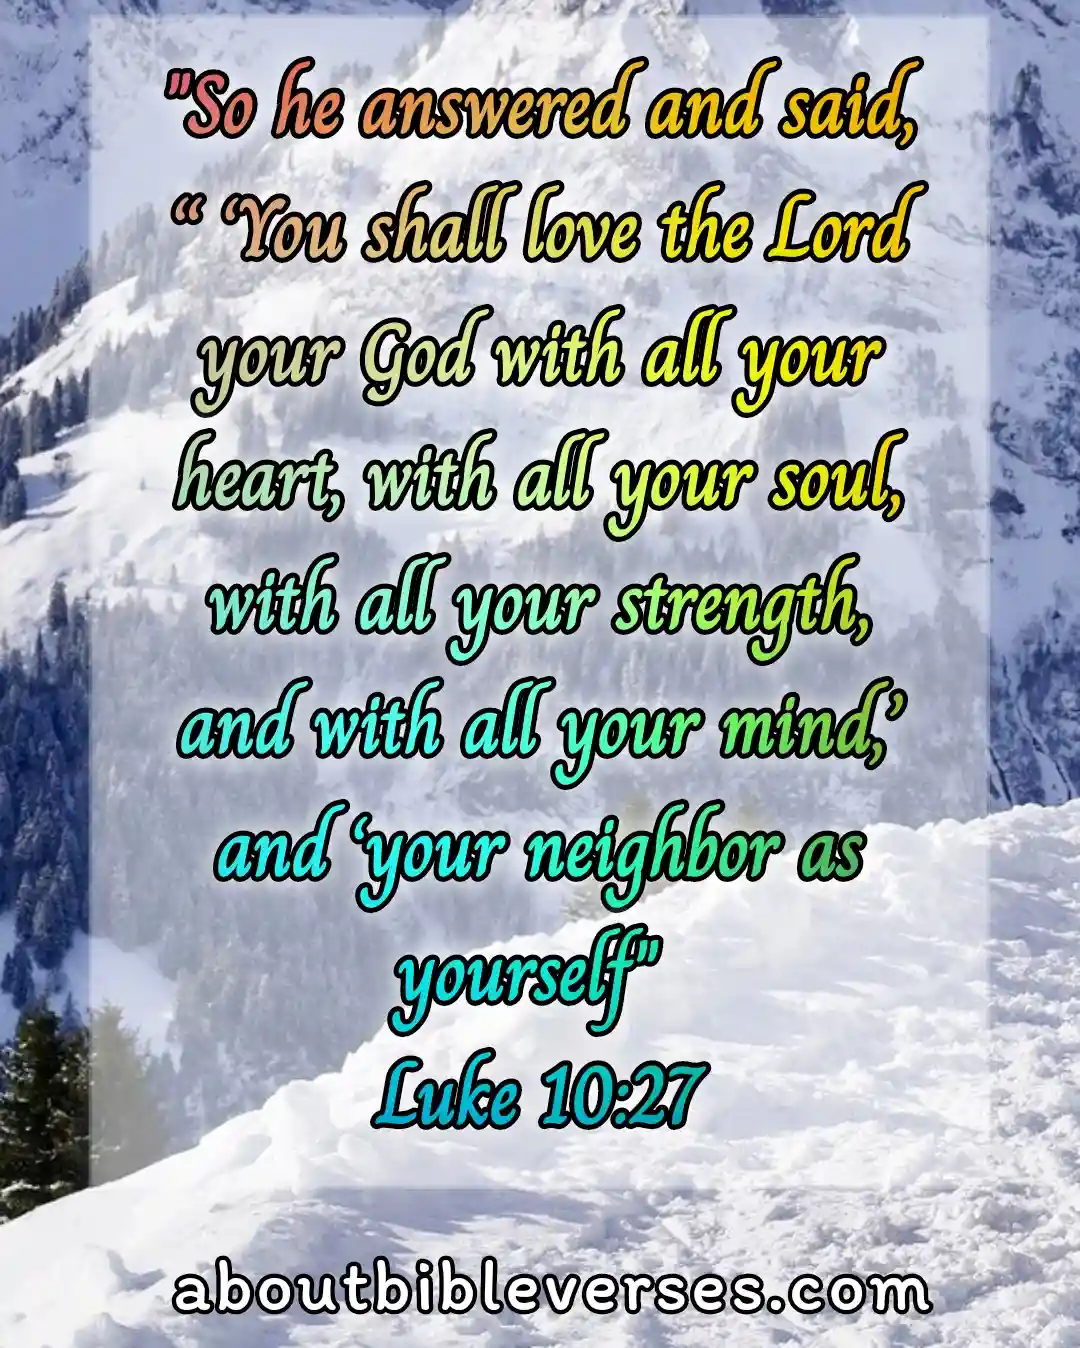 bible verses loving your neighbor (Luke 10:27)